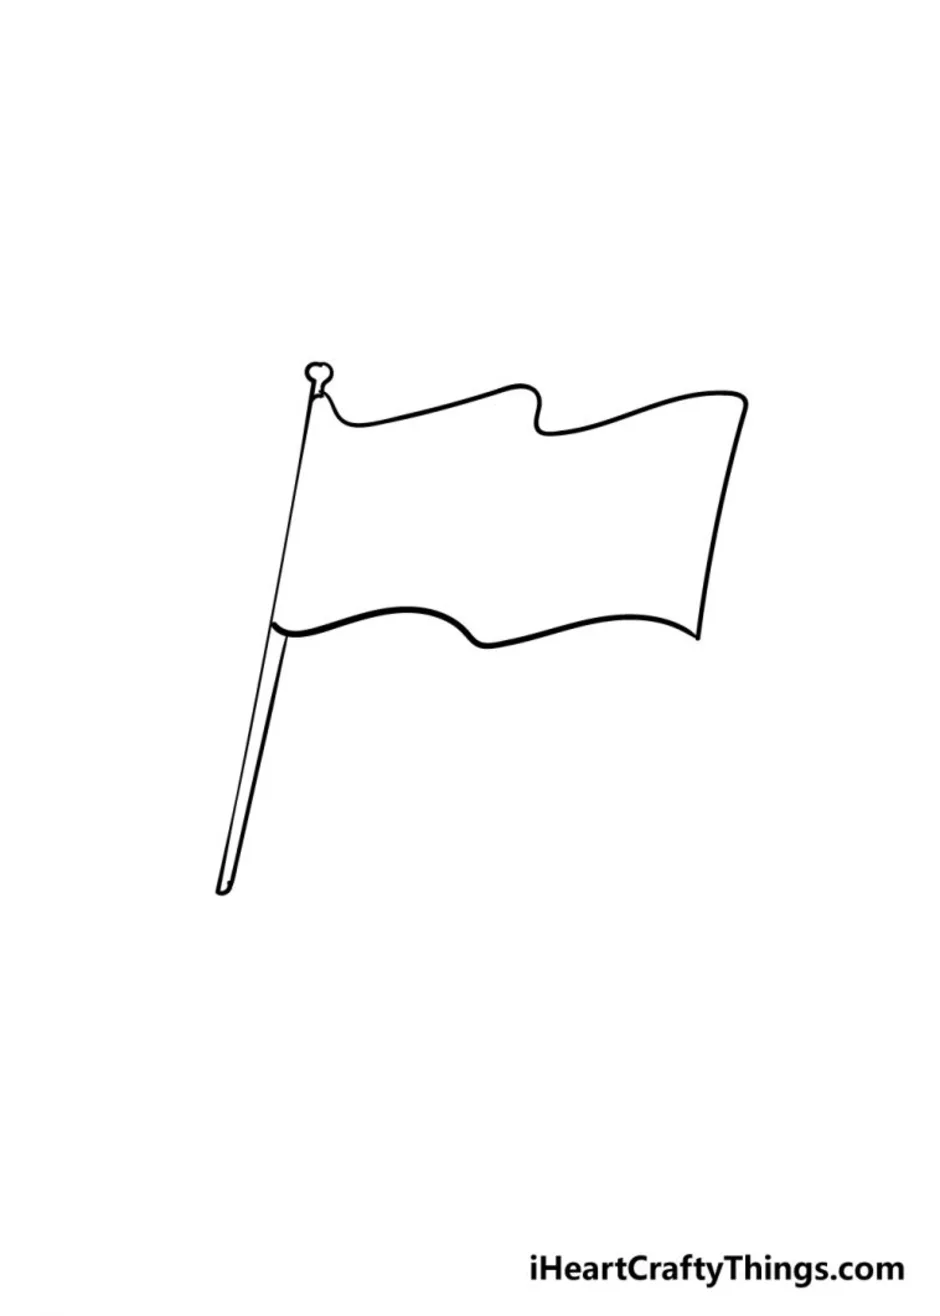 фото нарисованного флага